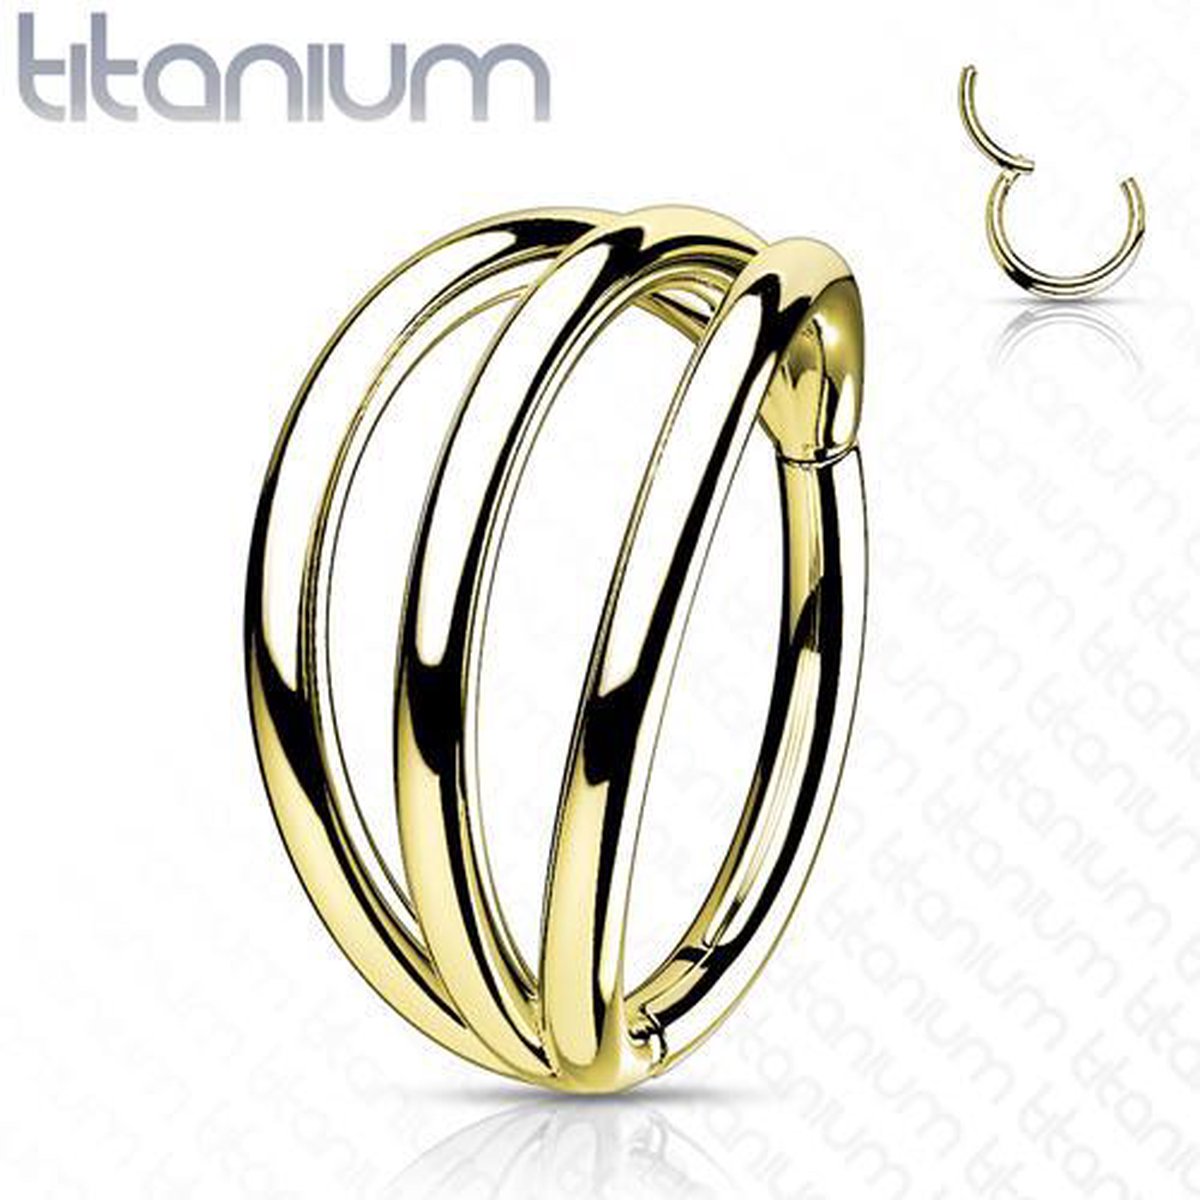 Piercing high quality titanium tripple hoop 10mm gold plated - LMPiercings NL